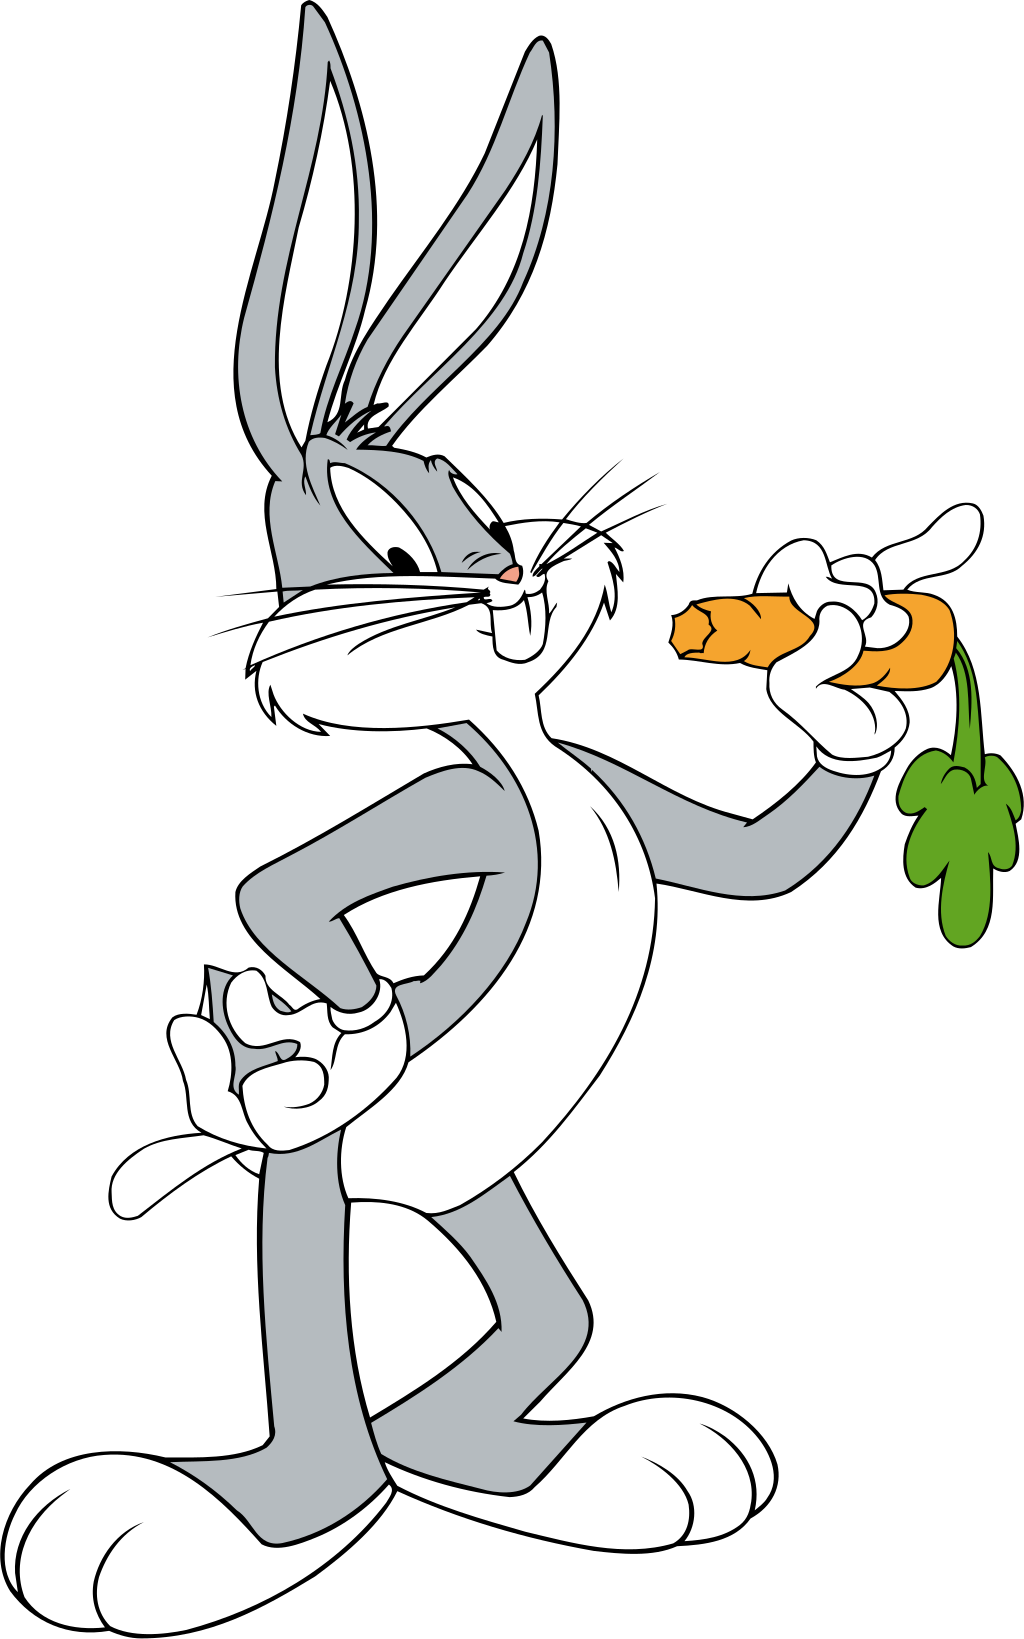 Blooper (mascot) - Wikipedia